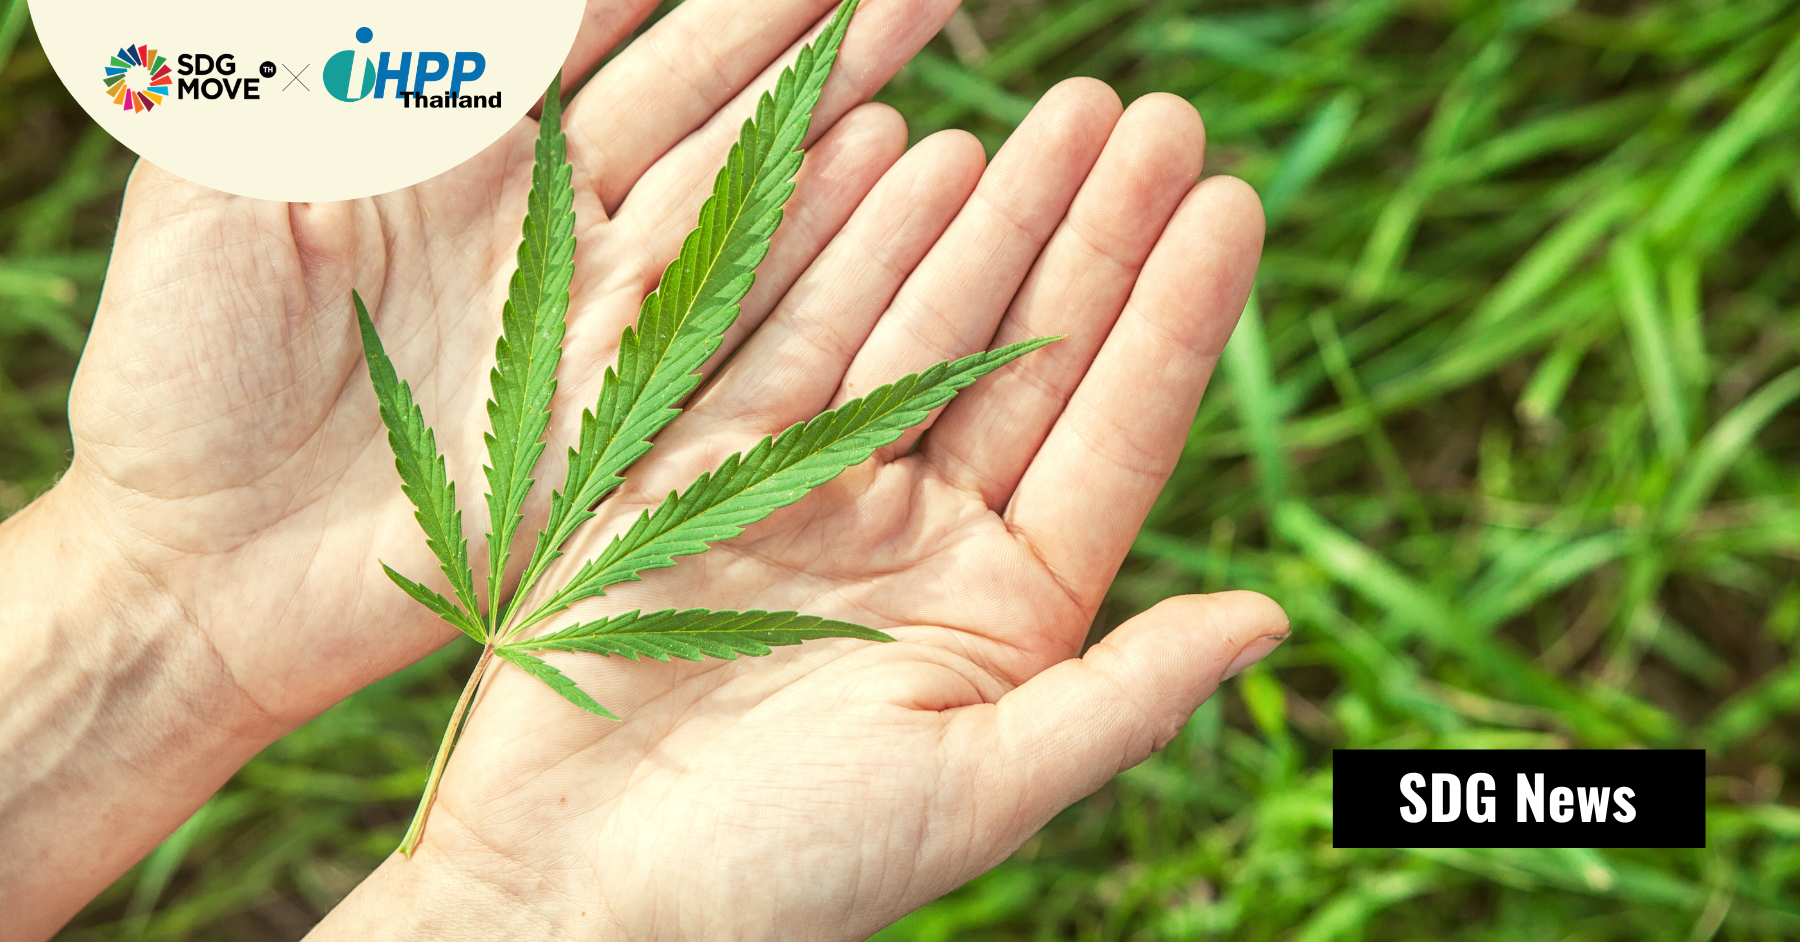 www.medcannabis.go.th เว็บไซต์ ‘กัญชาทางการแพทย์’ โดยกระทรวงสาธารณสุข